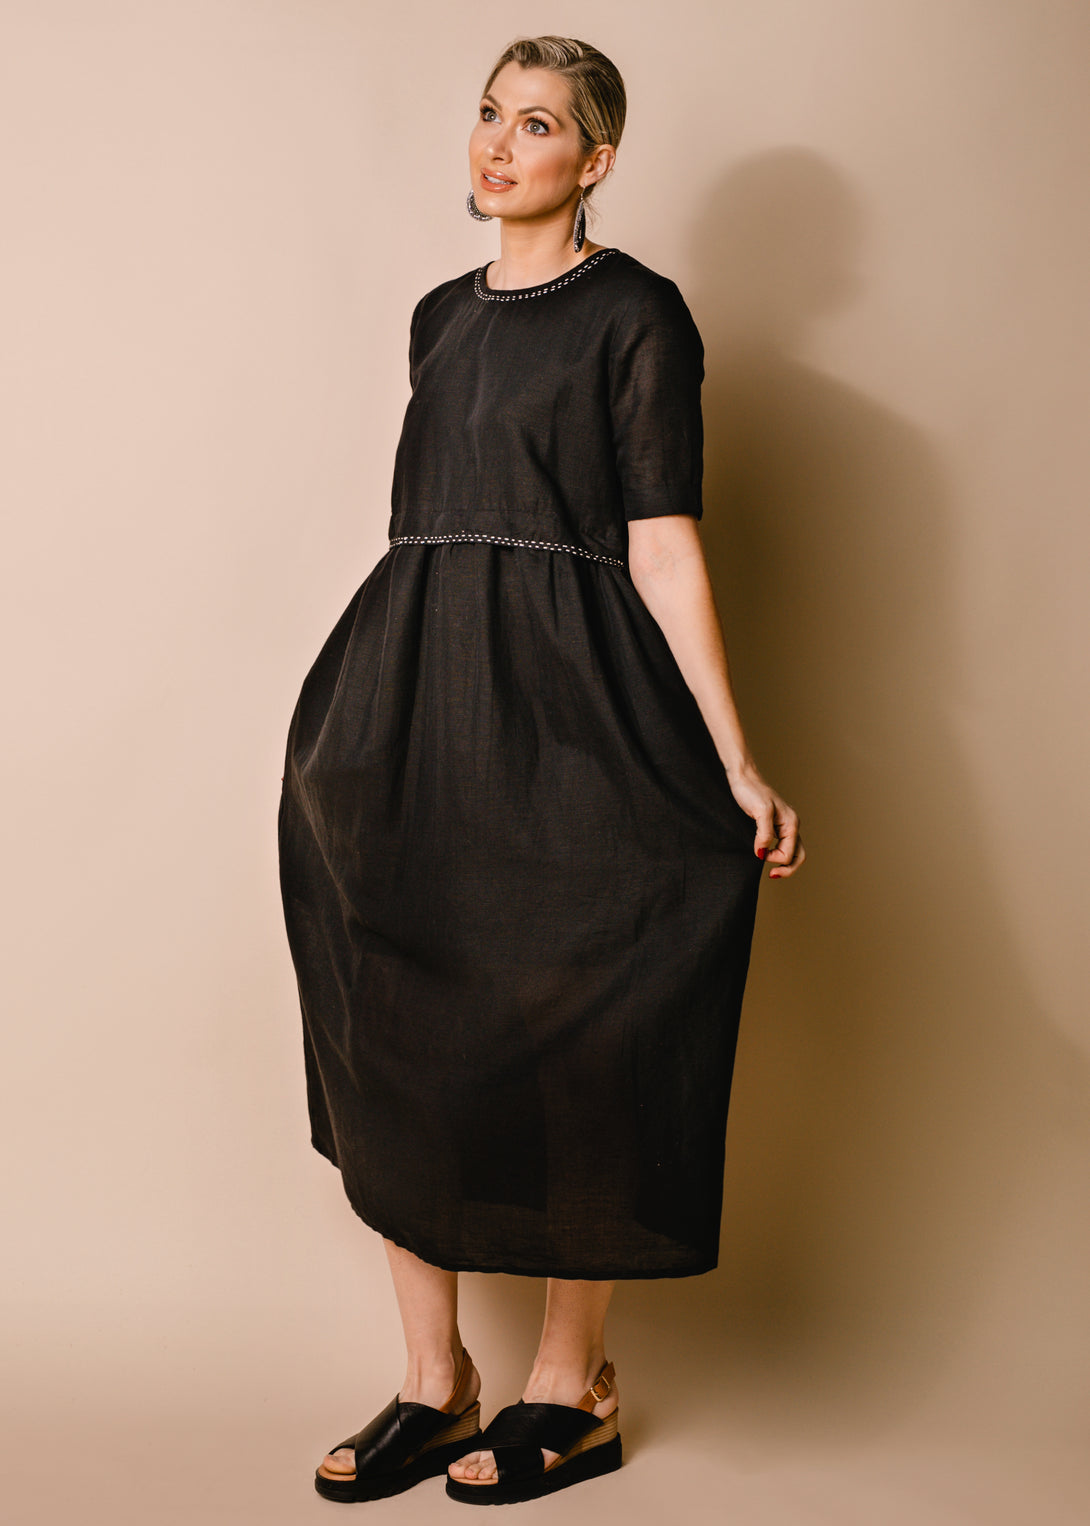 Mackenzie Linen Blend Dress in Onyx - Imagine Fashion